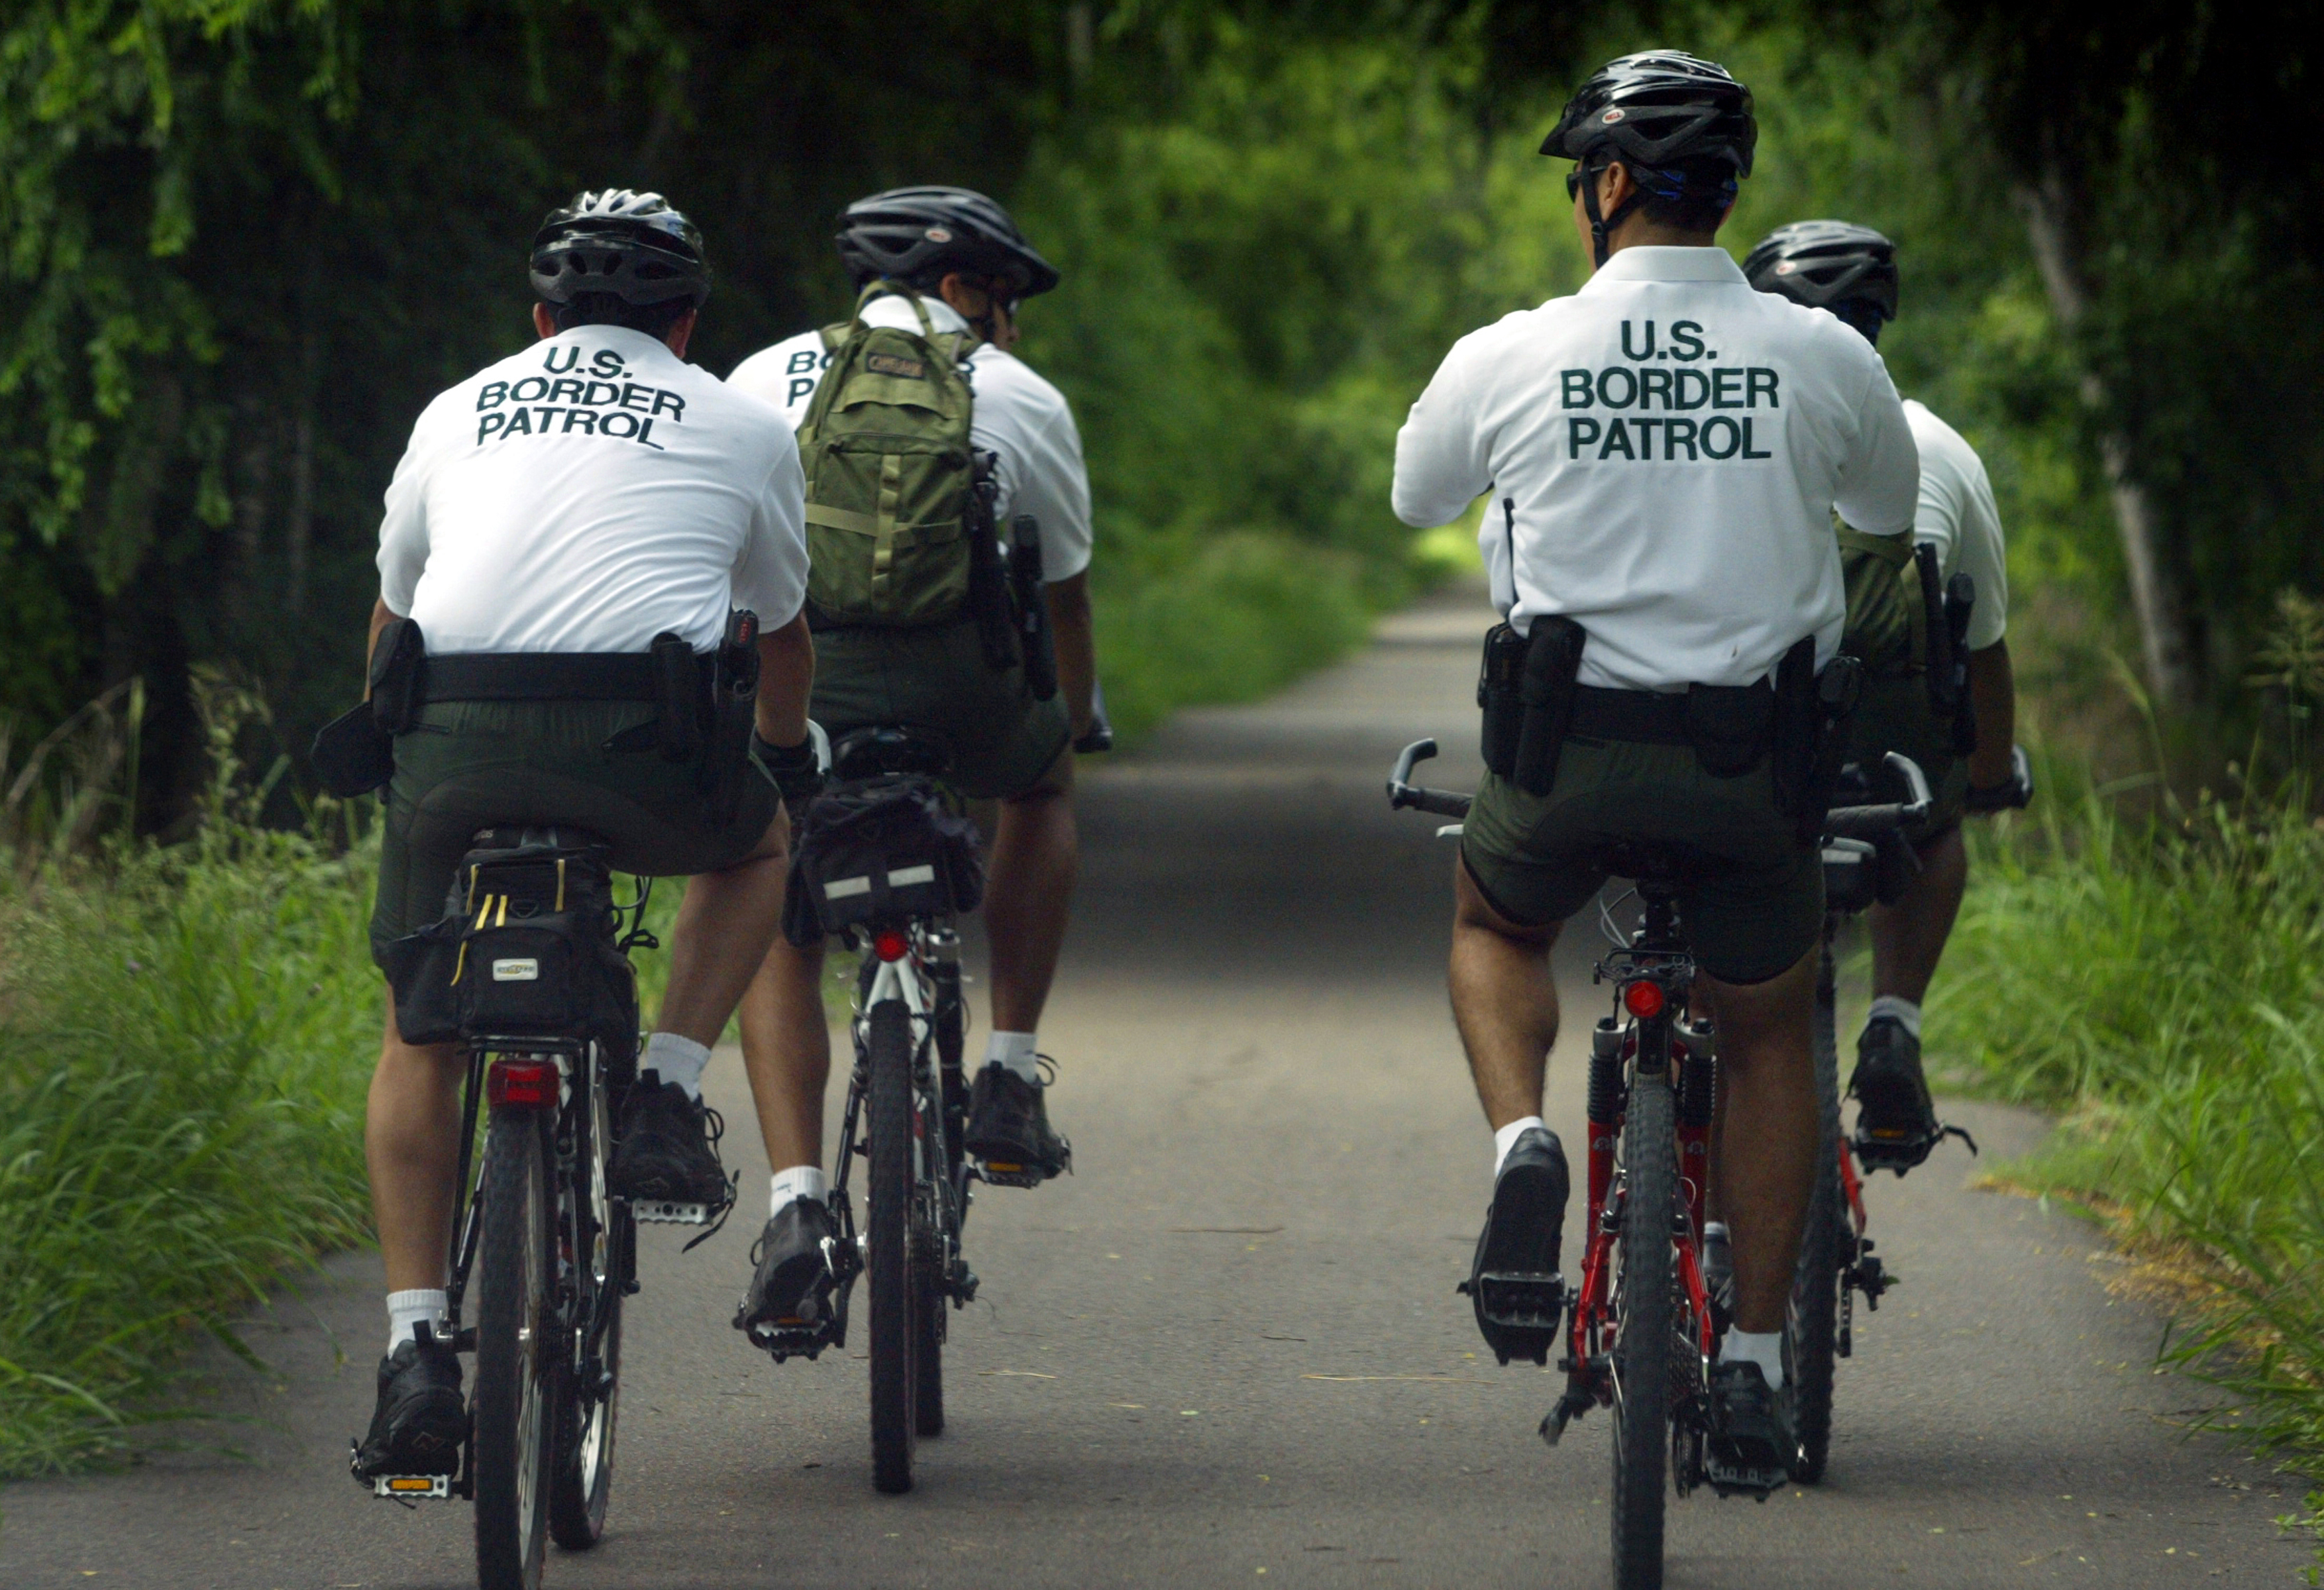 U.S. Border Patrol bicycle unit on patrol in McAllen, Texas.